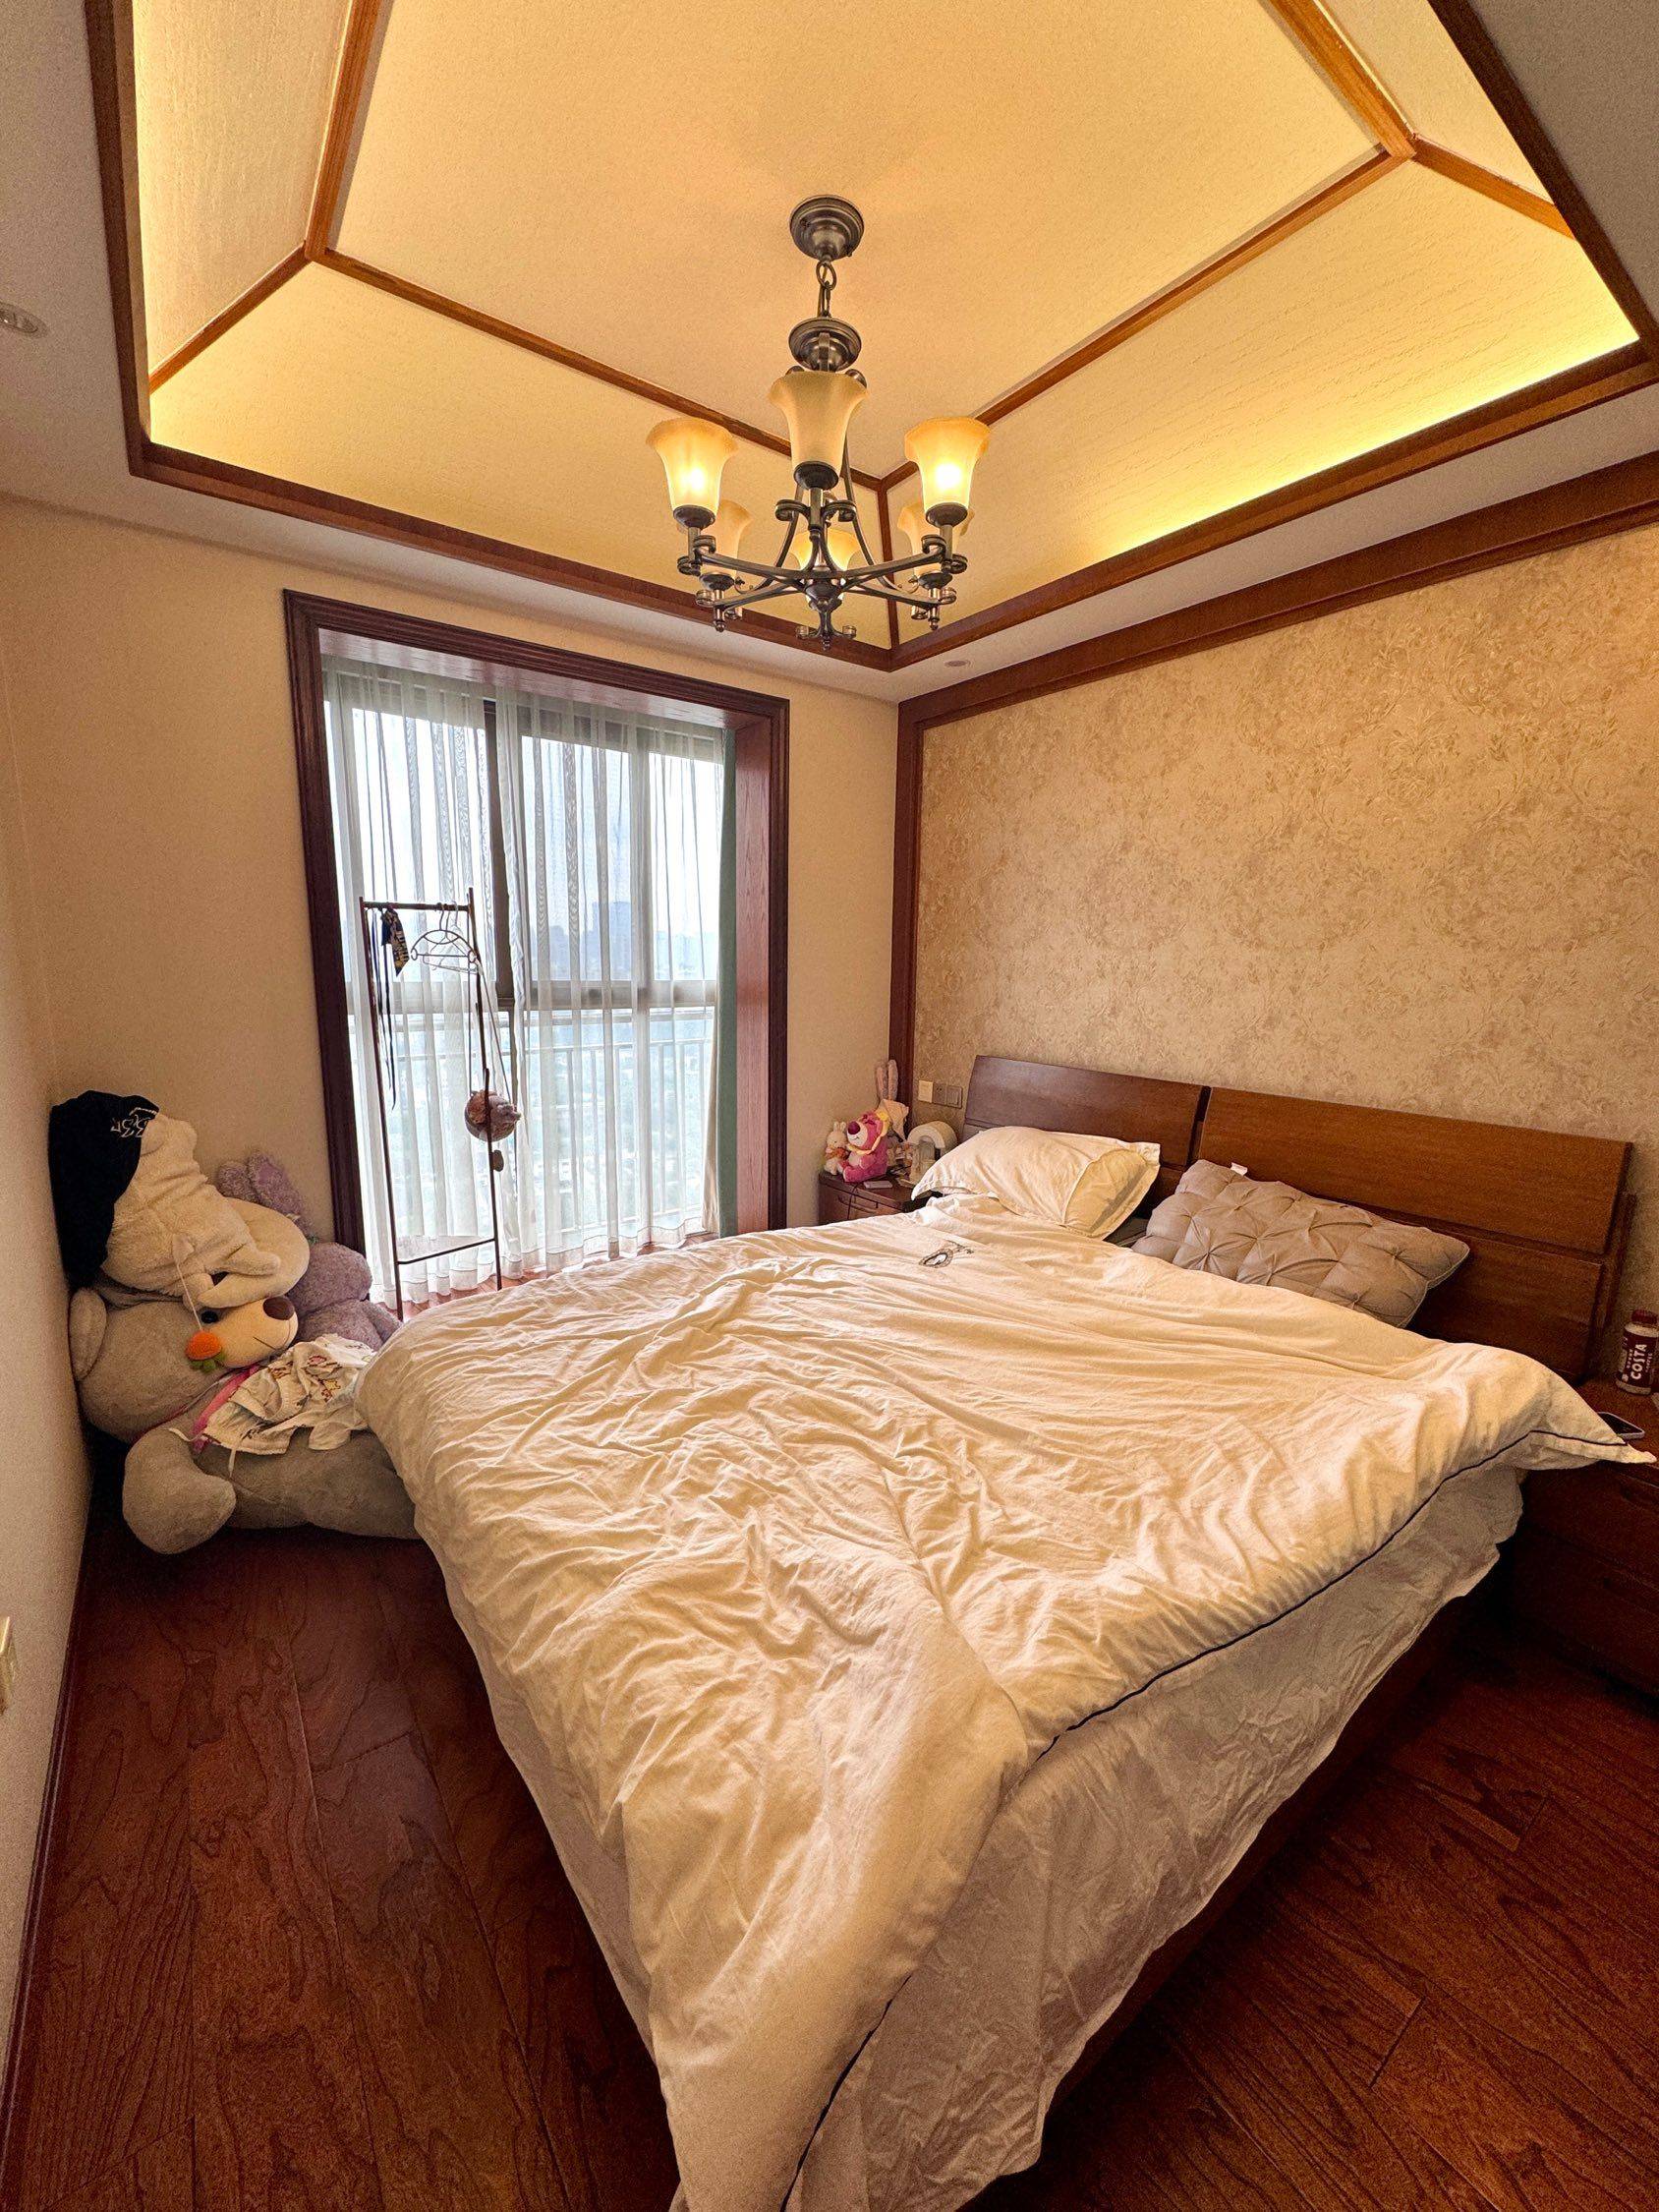 Chengdu-JinJiang-Cozy Home,Clean&Comfy,No Gender Limit,Hustle & Bustle,“Friends”,Chilled,LGBTQ Friendly,Pet Friendly